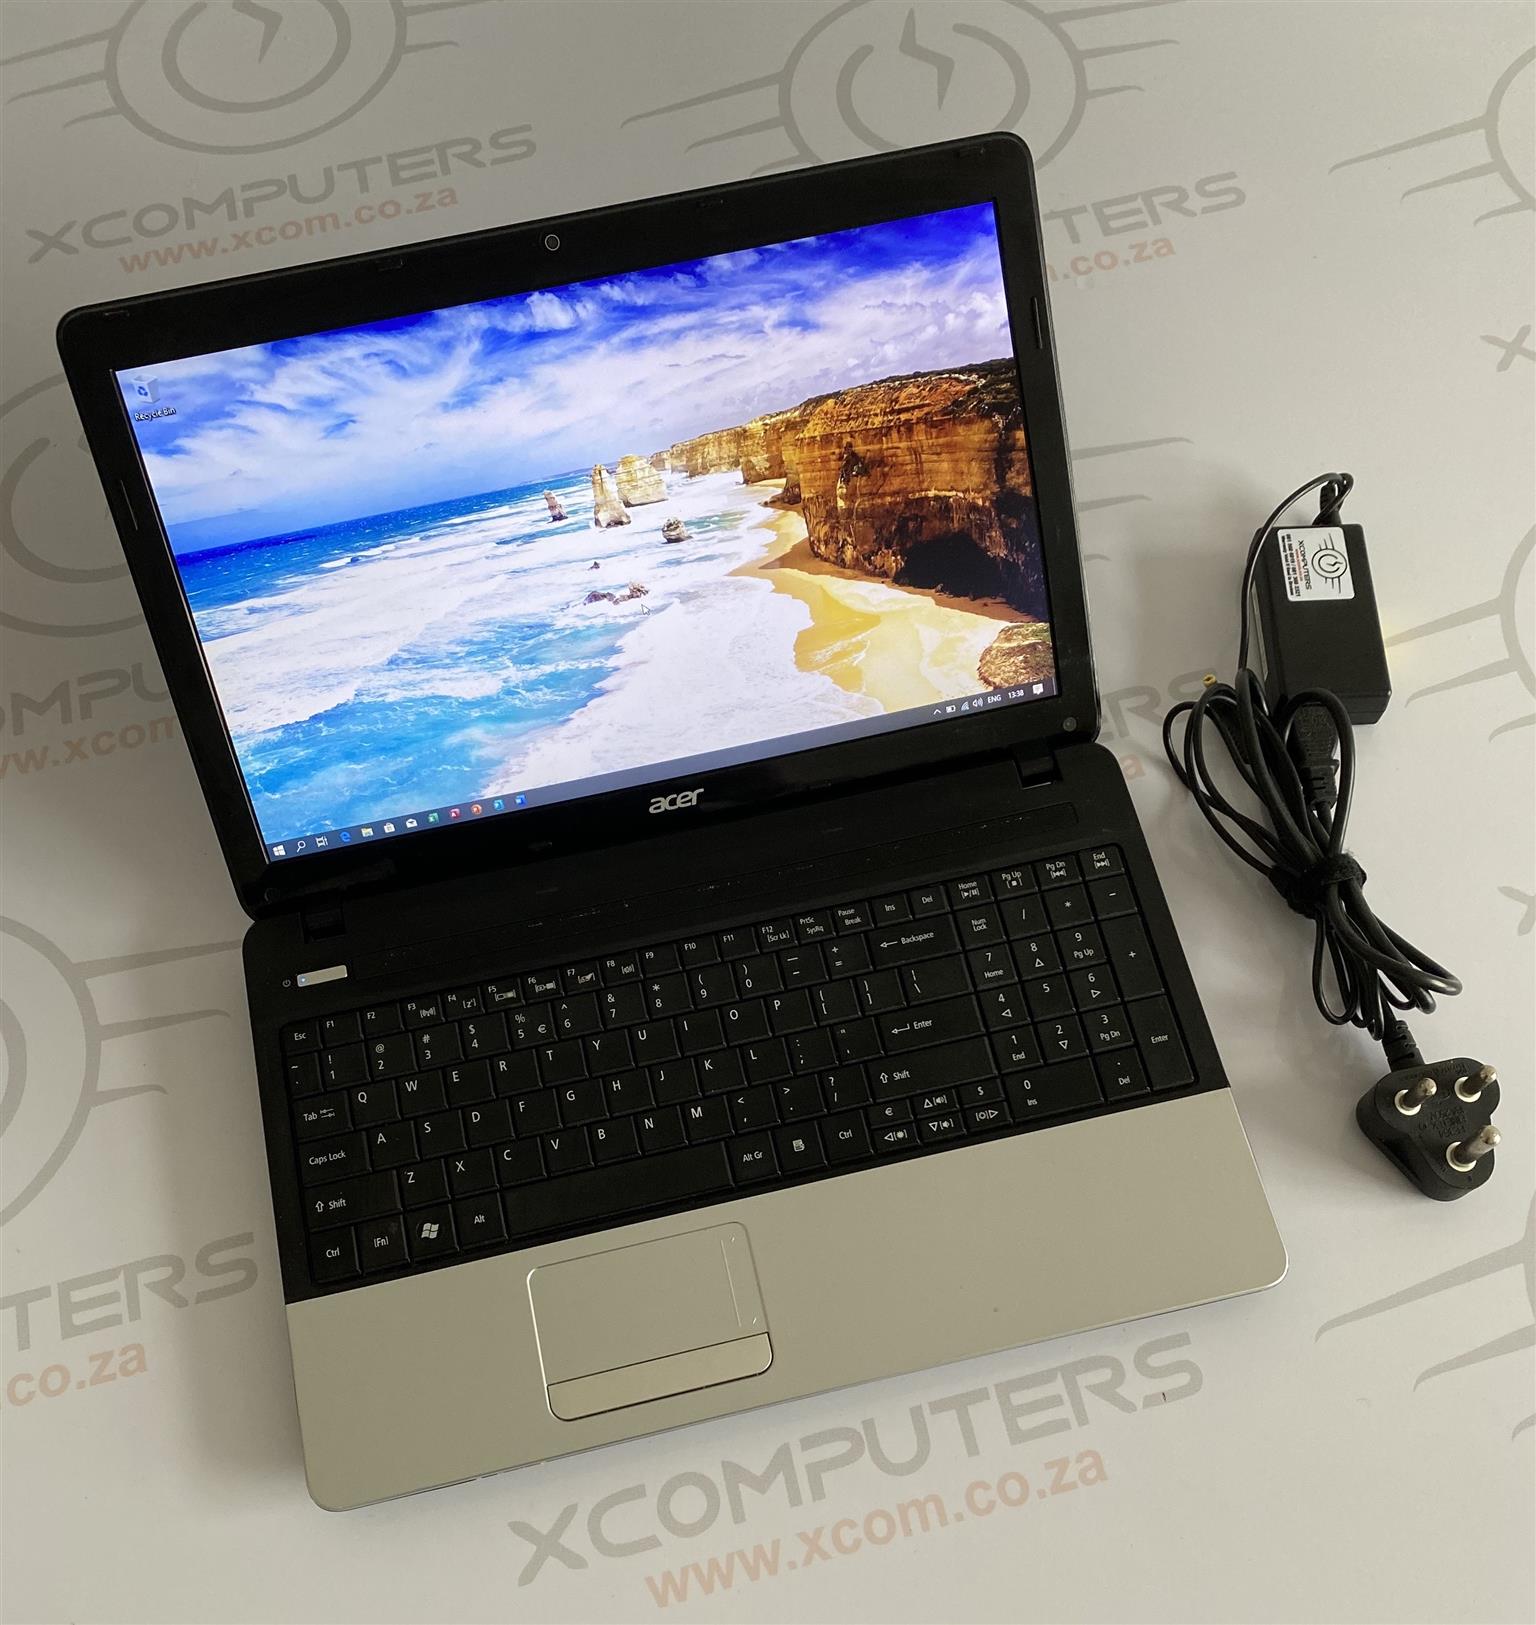 Acer Intel Celeron Laptop